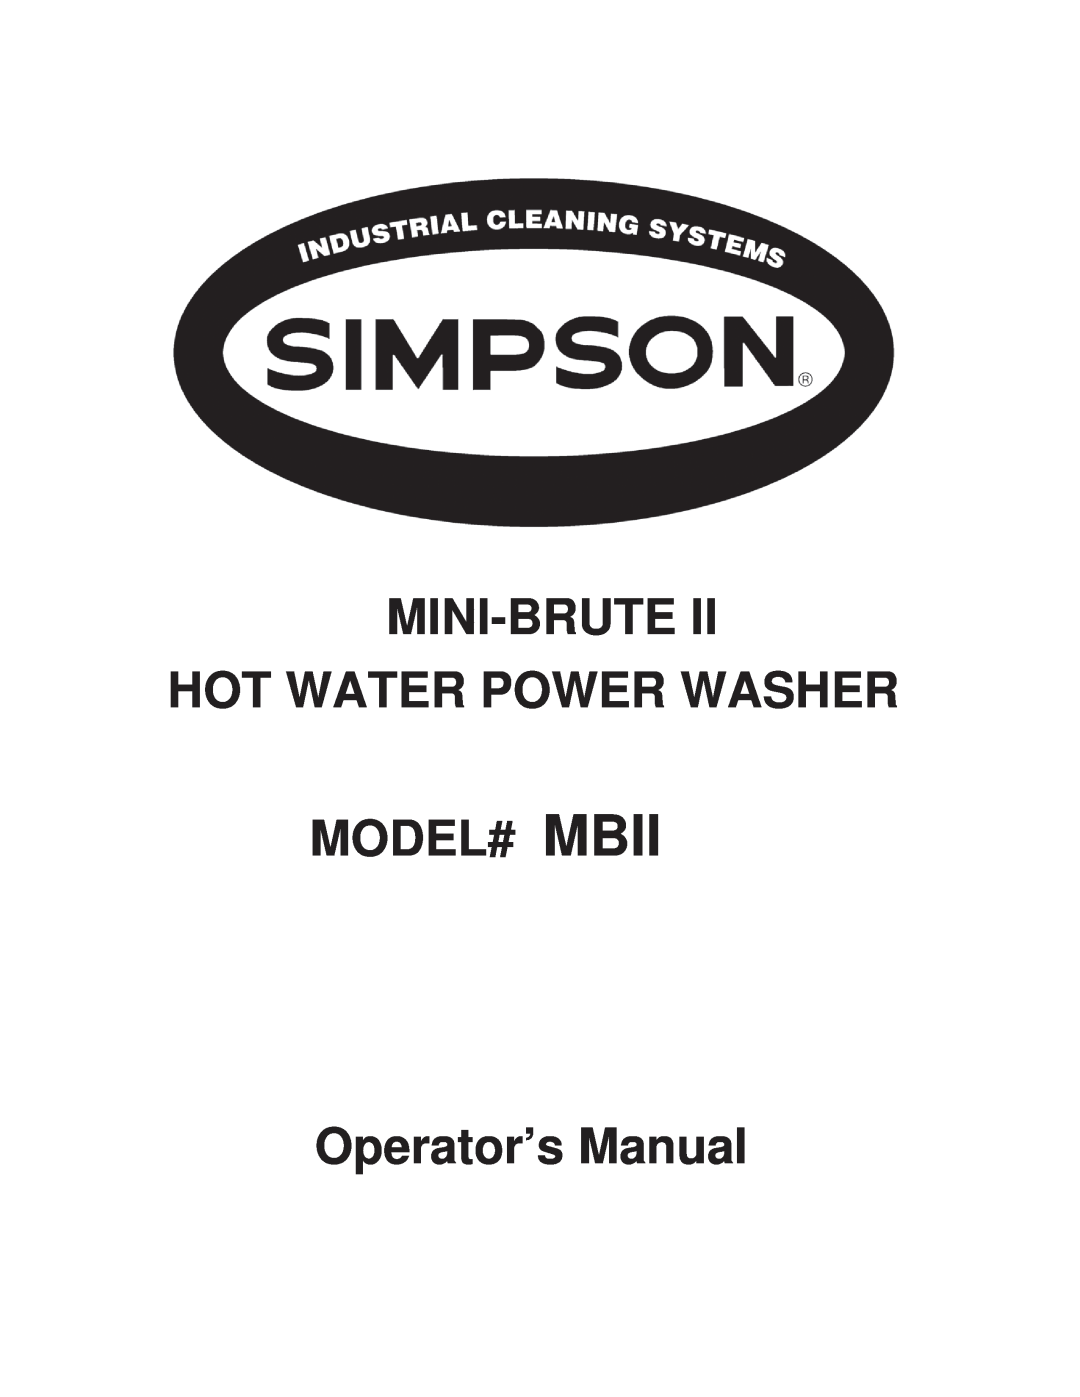 Simpson MBII manual Mini-Brute Hot Water Power Washer Model# Mbii, Operator’s Manual 